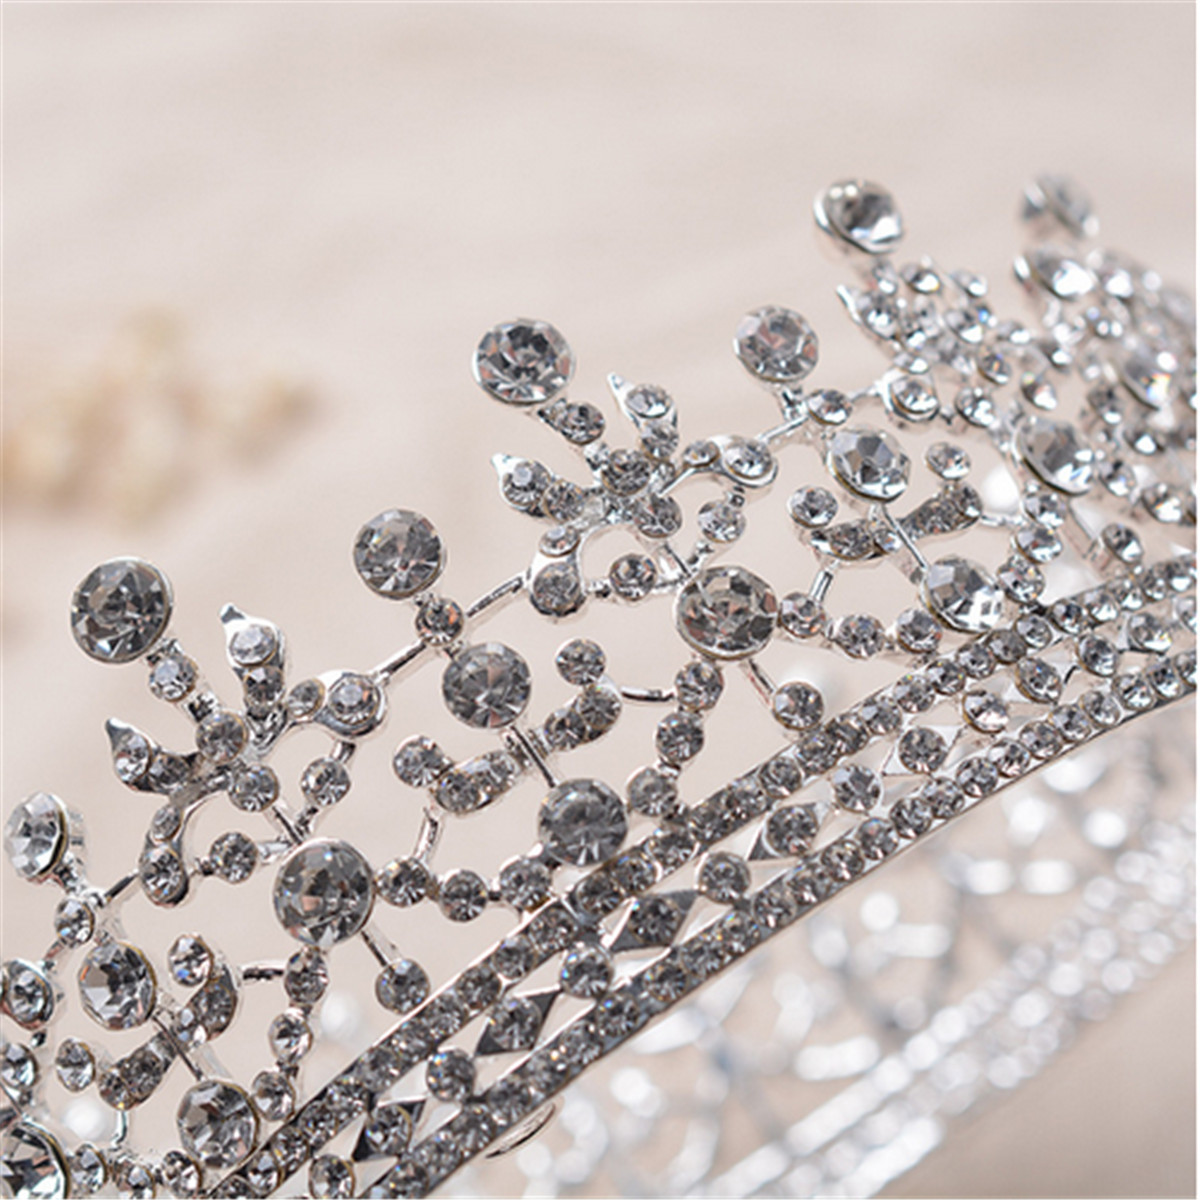 Bride-Crystal-Rhinestone-Crown-Wedding-Bridal-Headbrand-Queen-Tiara-Hair-Accessories-1118391